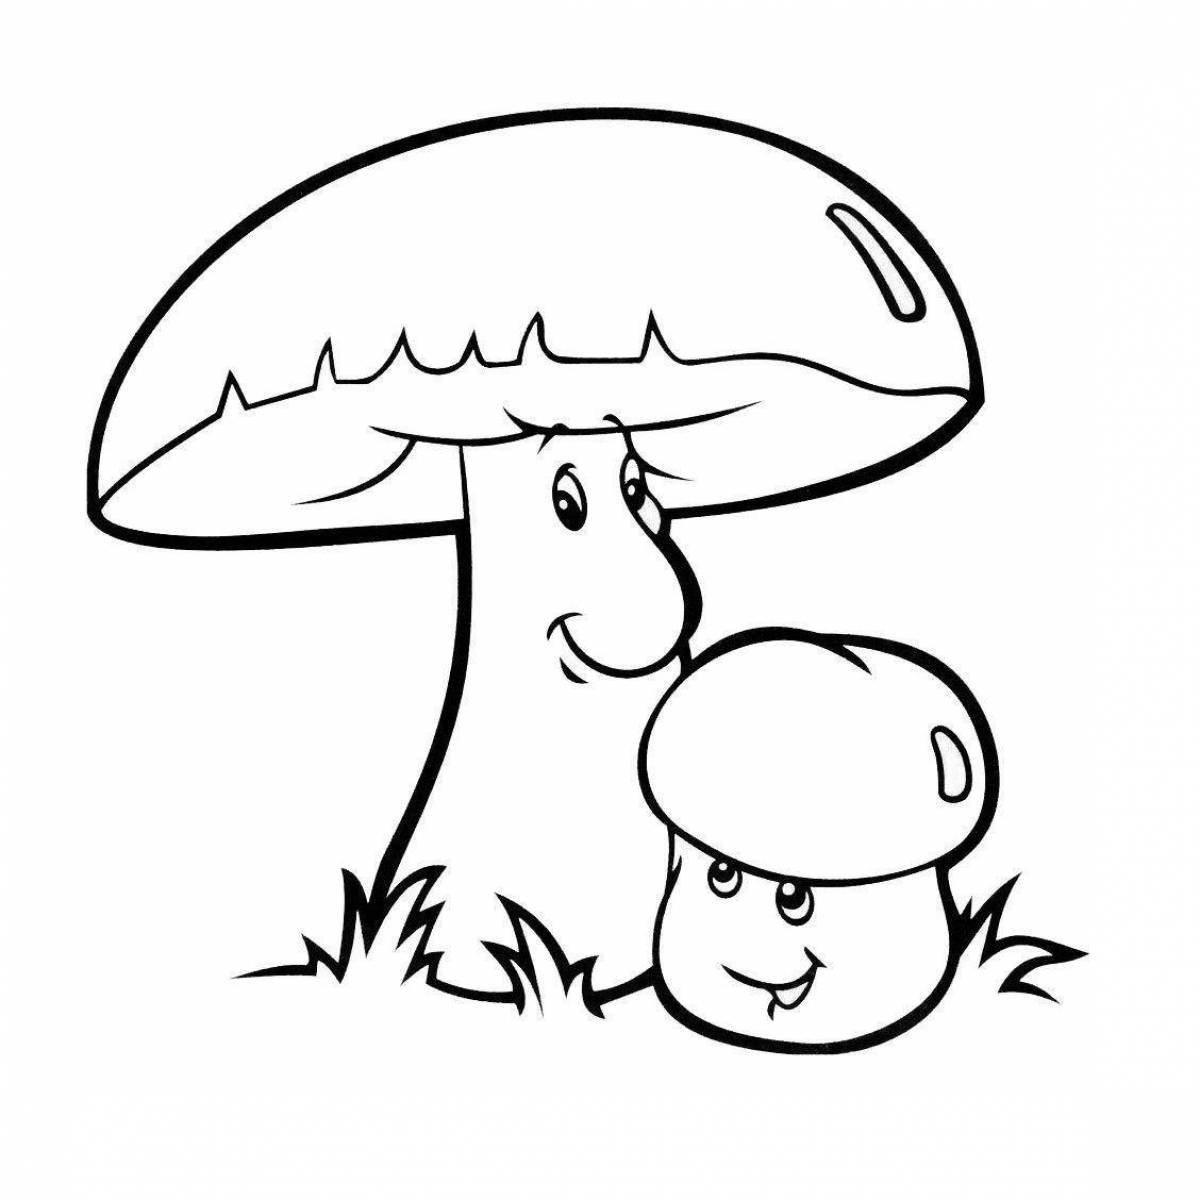 Glitter mushroom coloring page